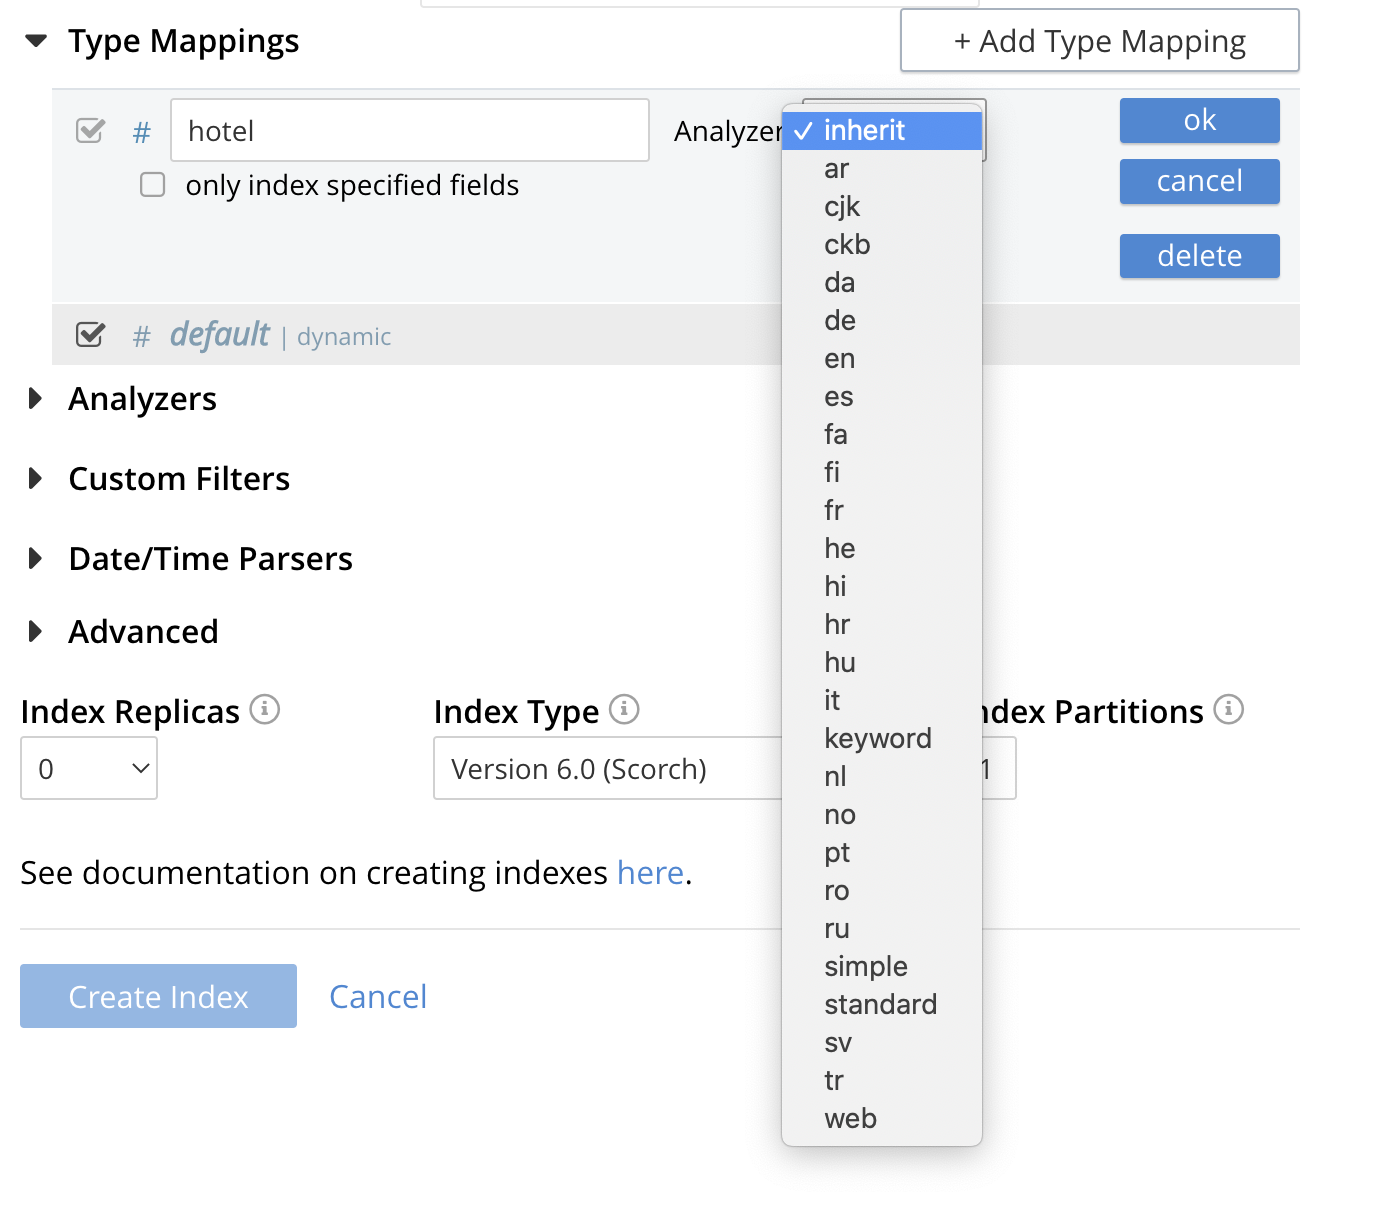 fts type mappings ui analyzers menu